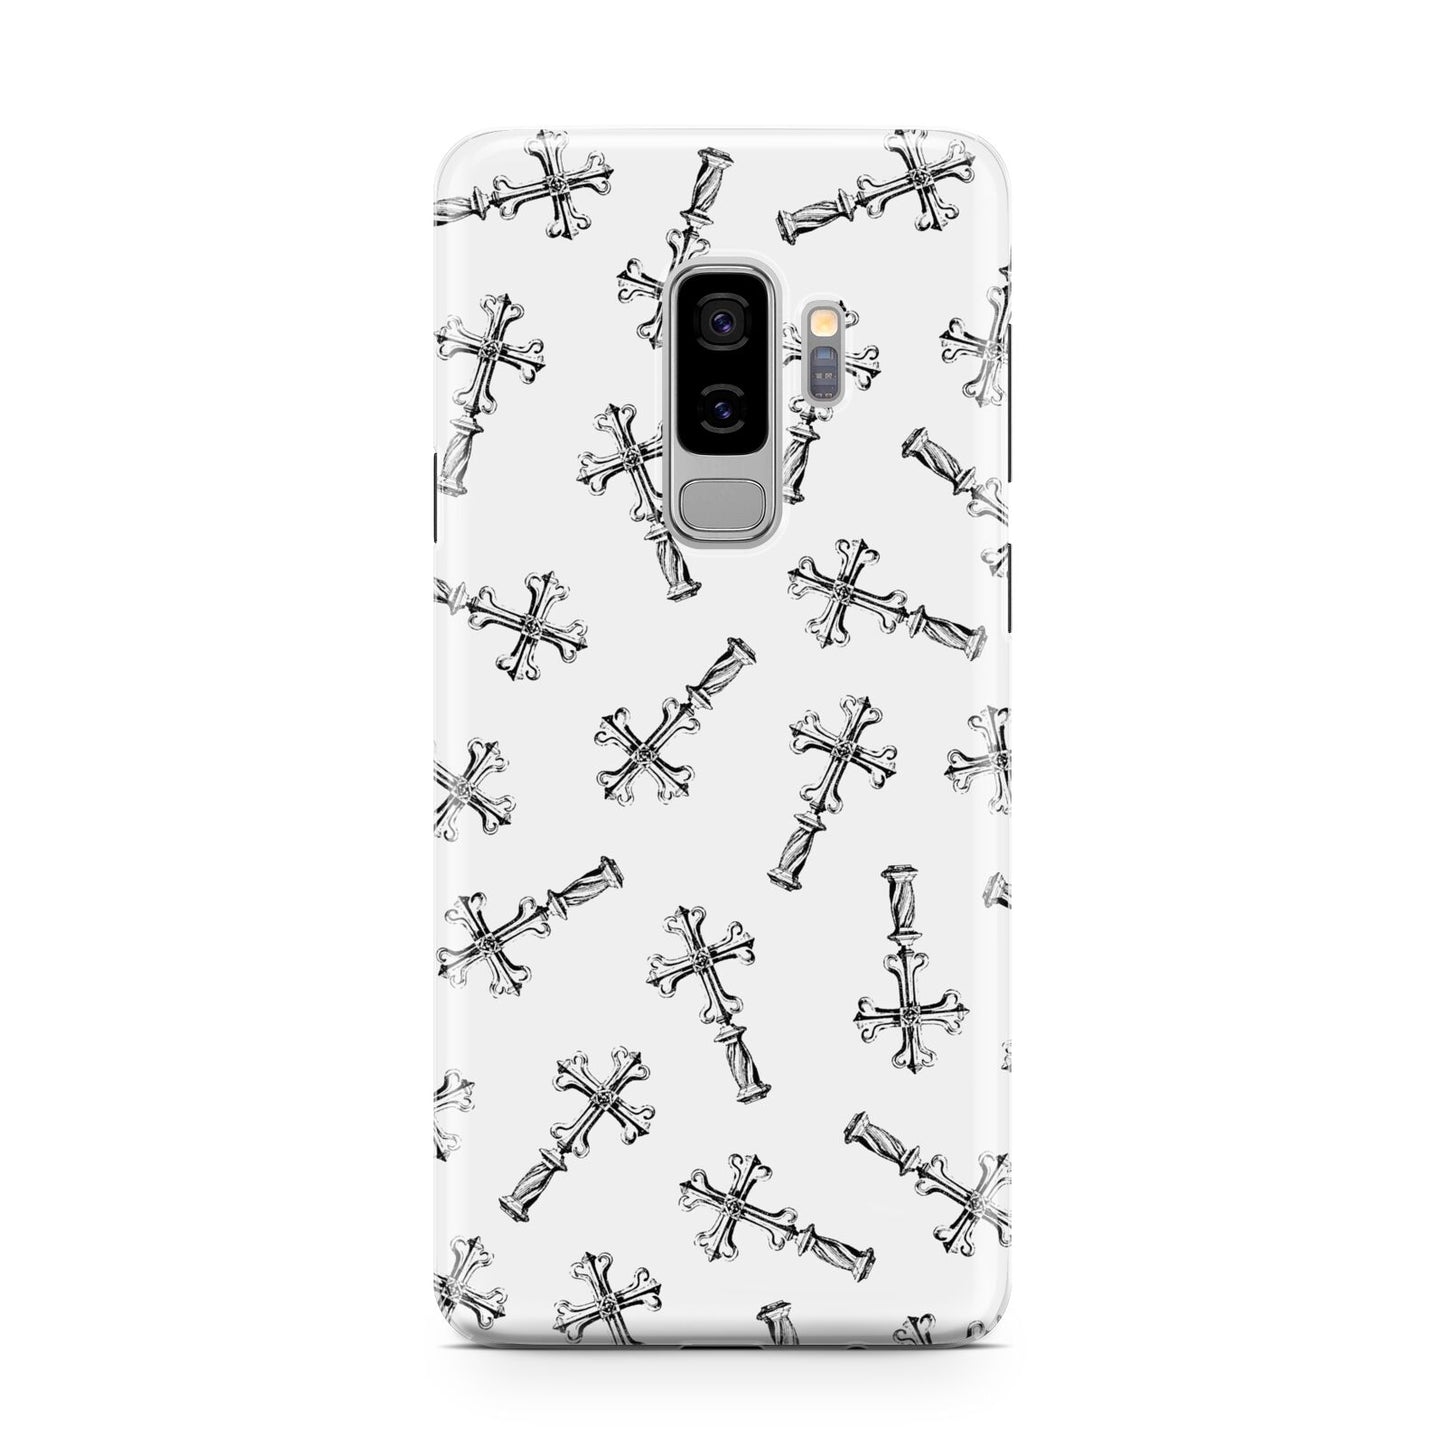 Monochrome Crosses Samsung Galaxy S9 Plus Case on Silver phone